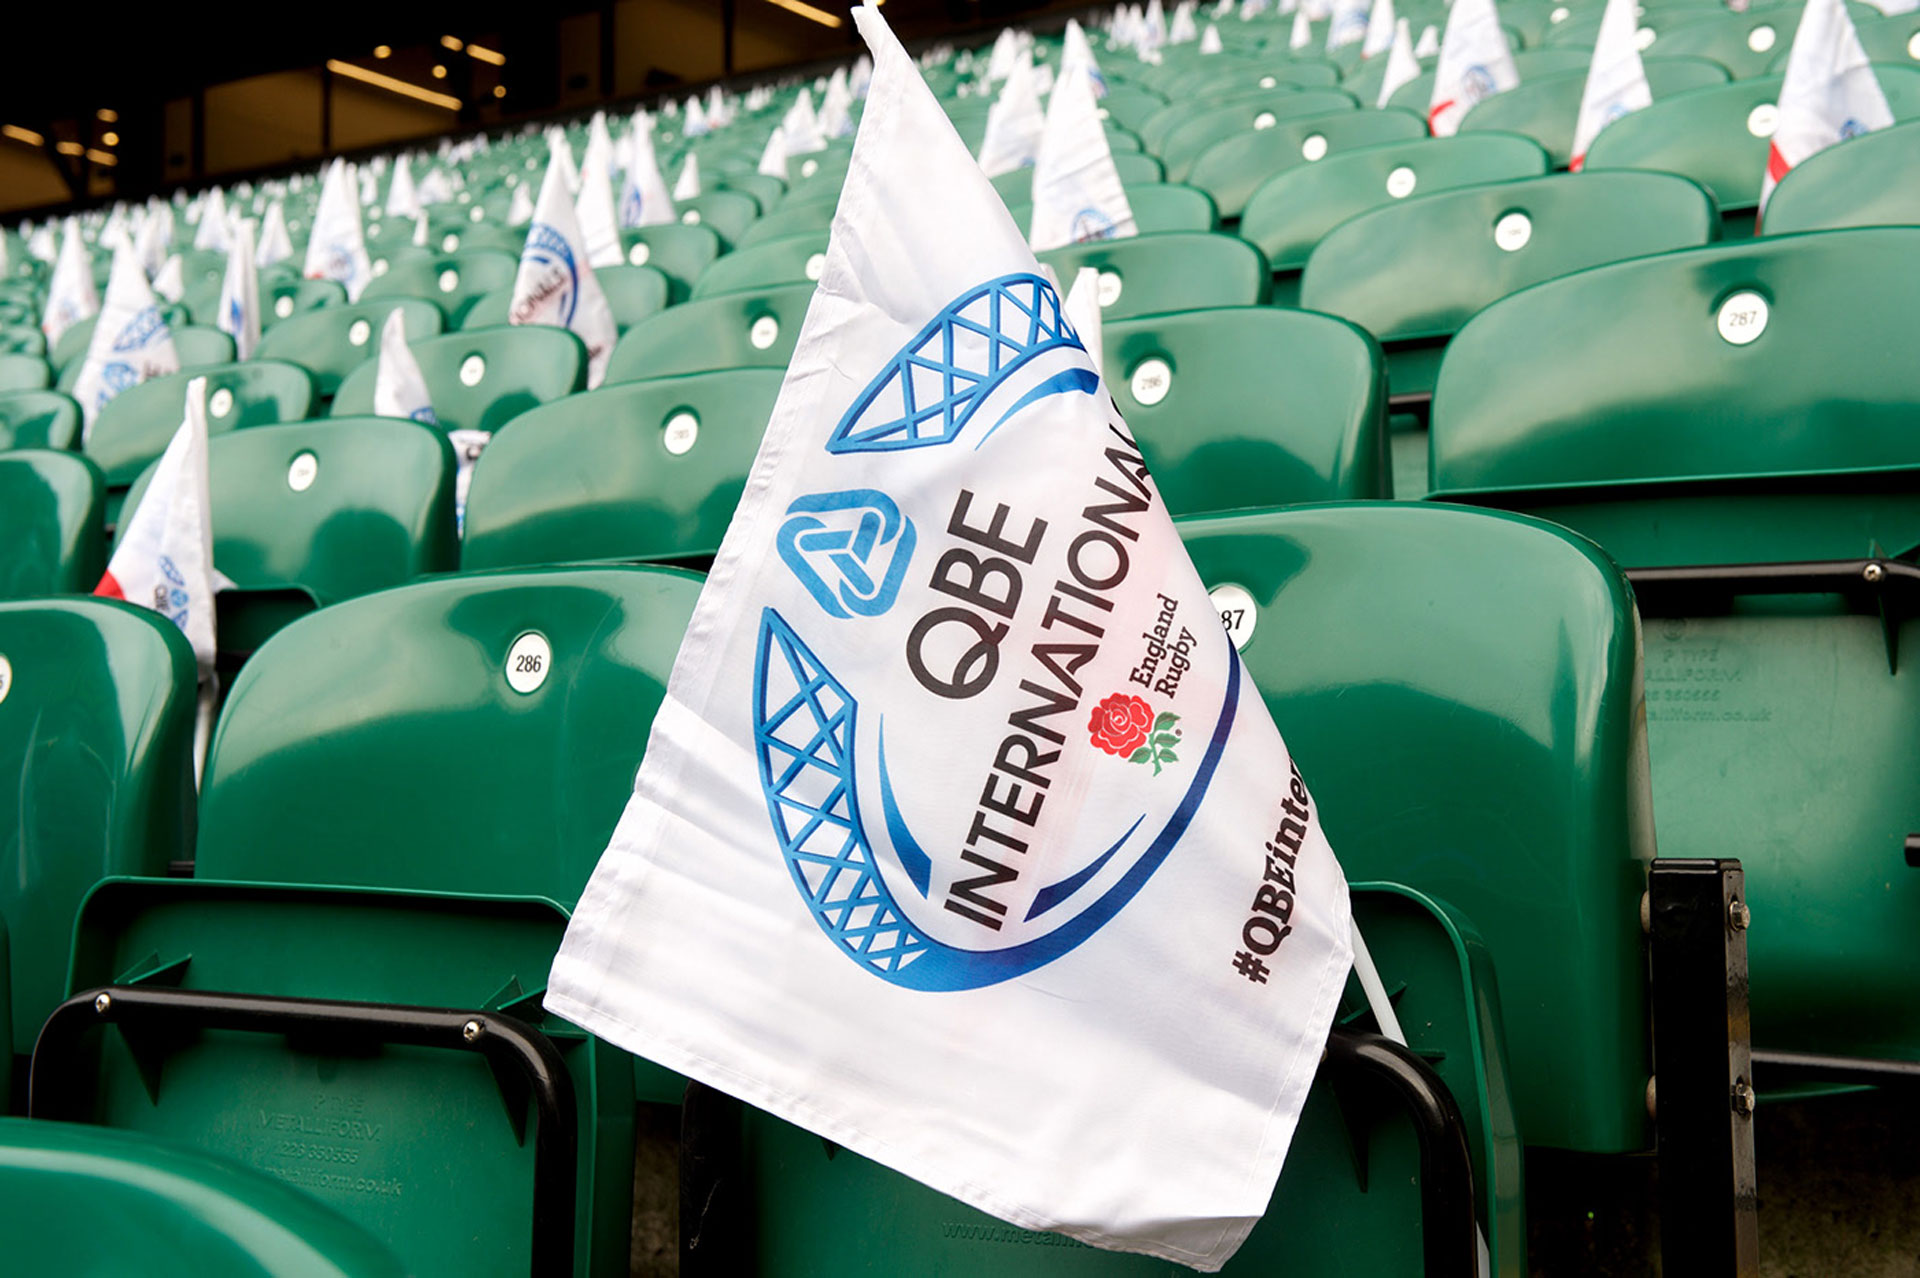 Glendale Creative QBE Internationals Rugby Twickenham Seat Flags